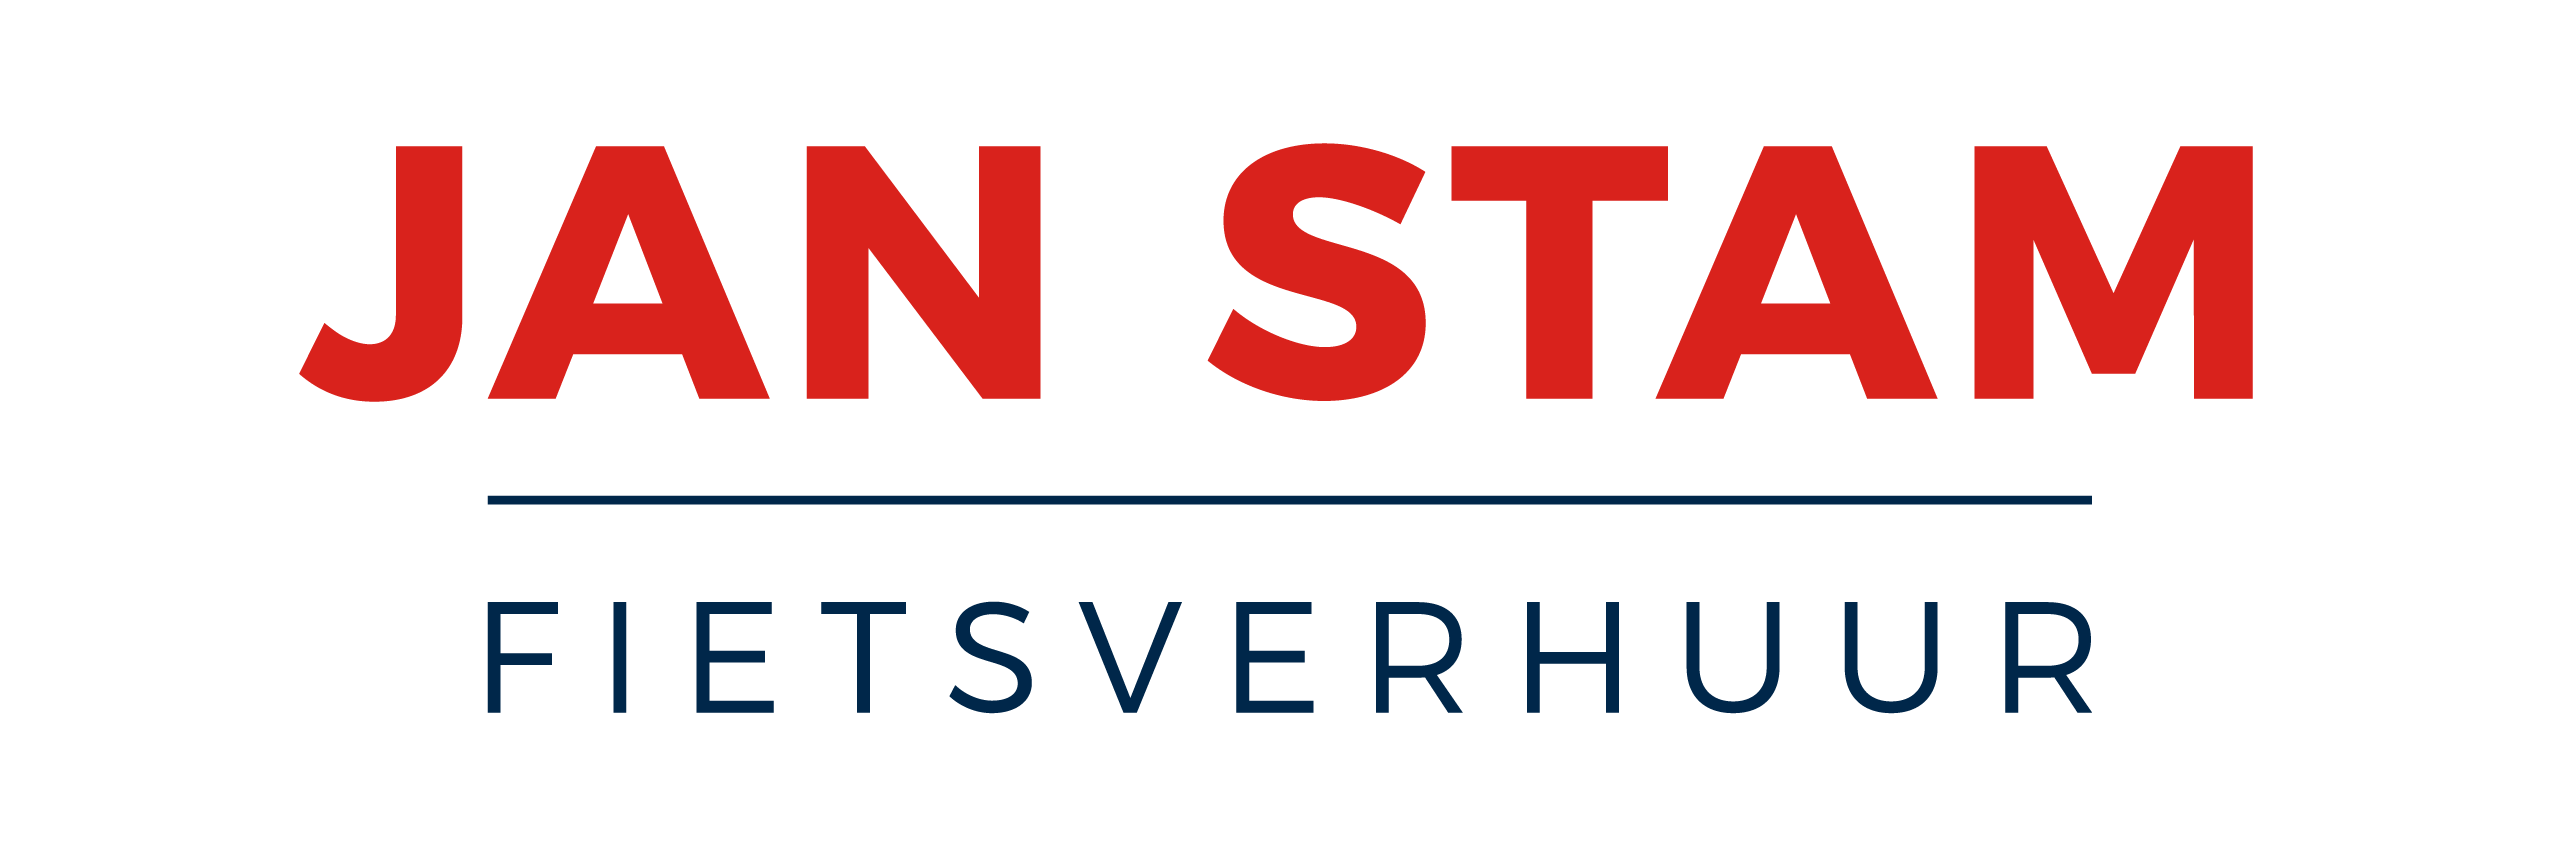 Jan Stam Fietsverhuur logo